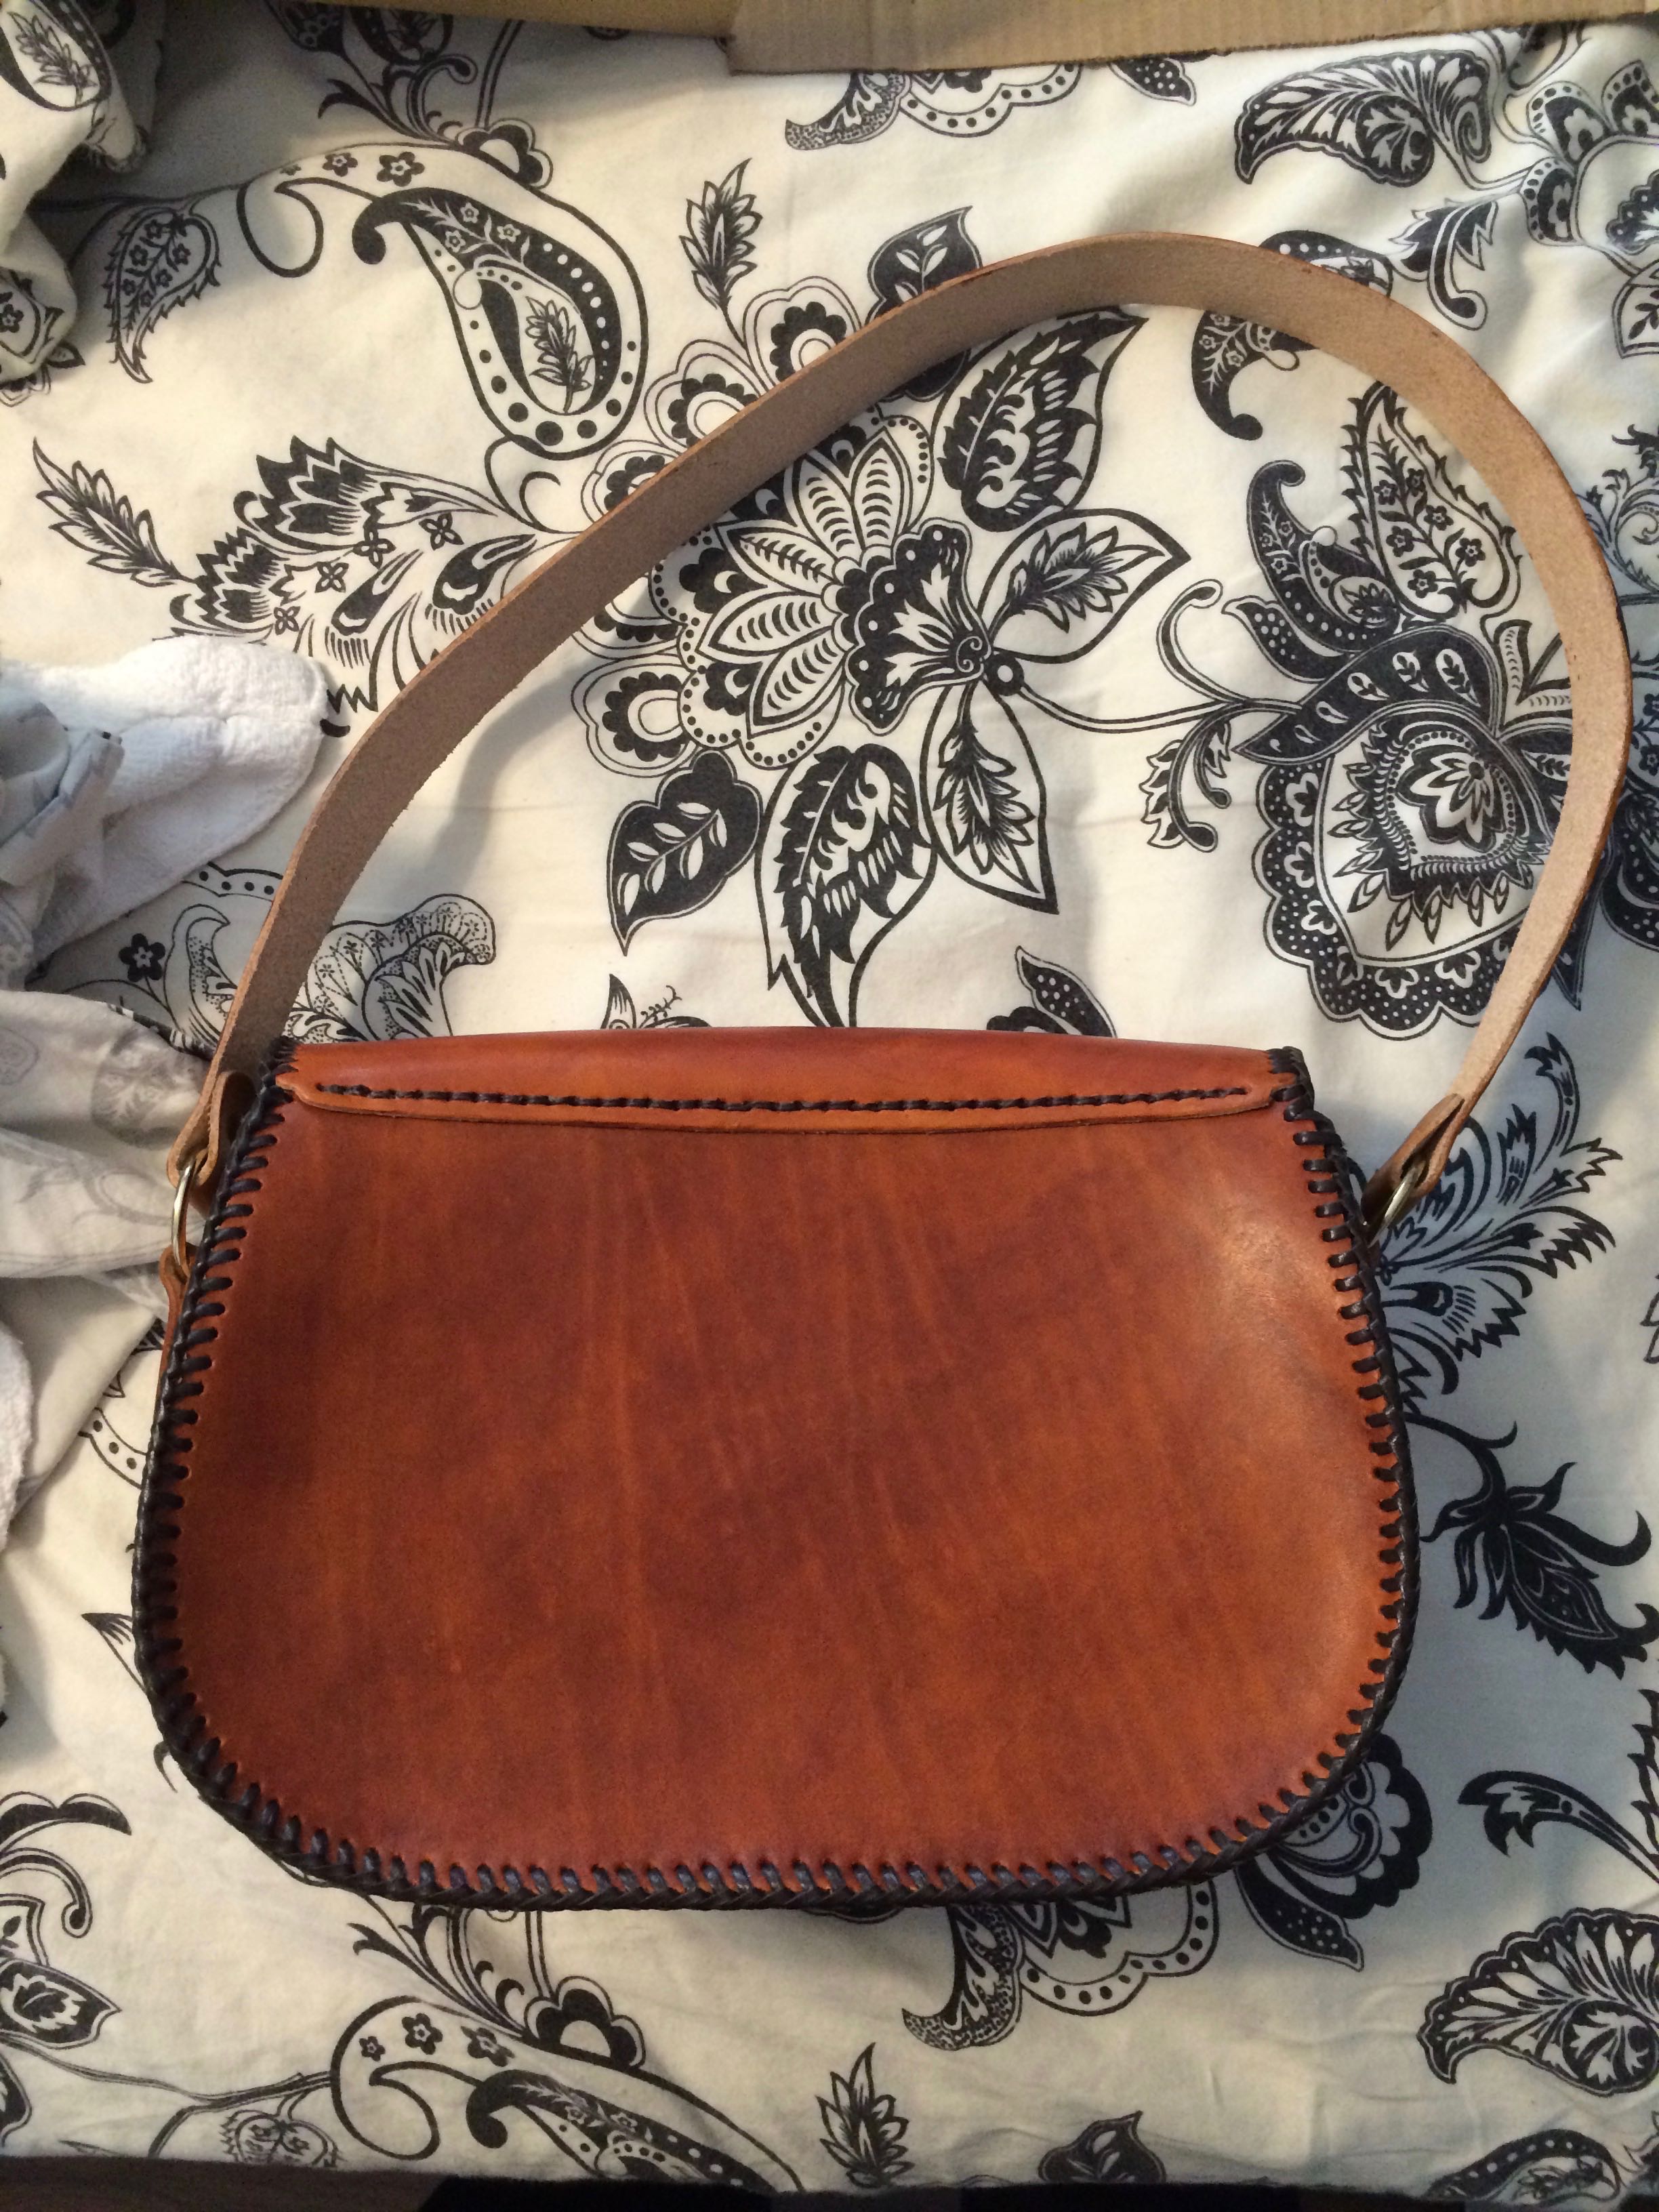 Tandy Revival Handbag/Purse with Navajo pattern - Purses, Wallets ...